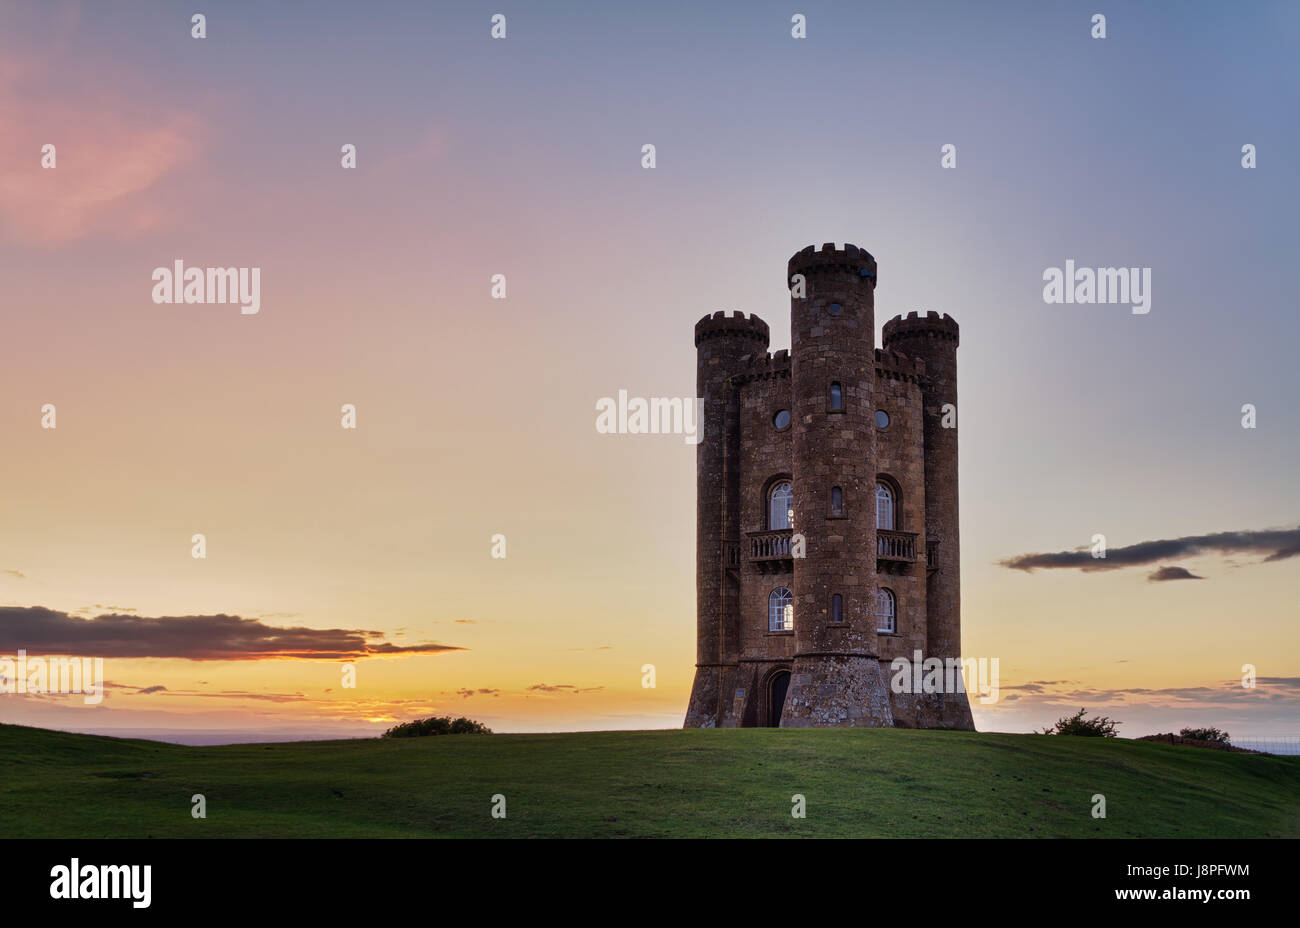 Inghilterra, crepuscolo, fiaba, rampart, merlata, landmark, torre, bella, Foto Stock